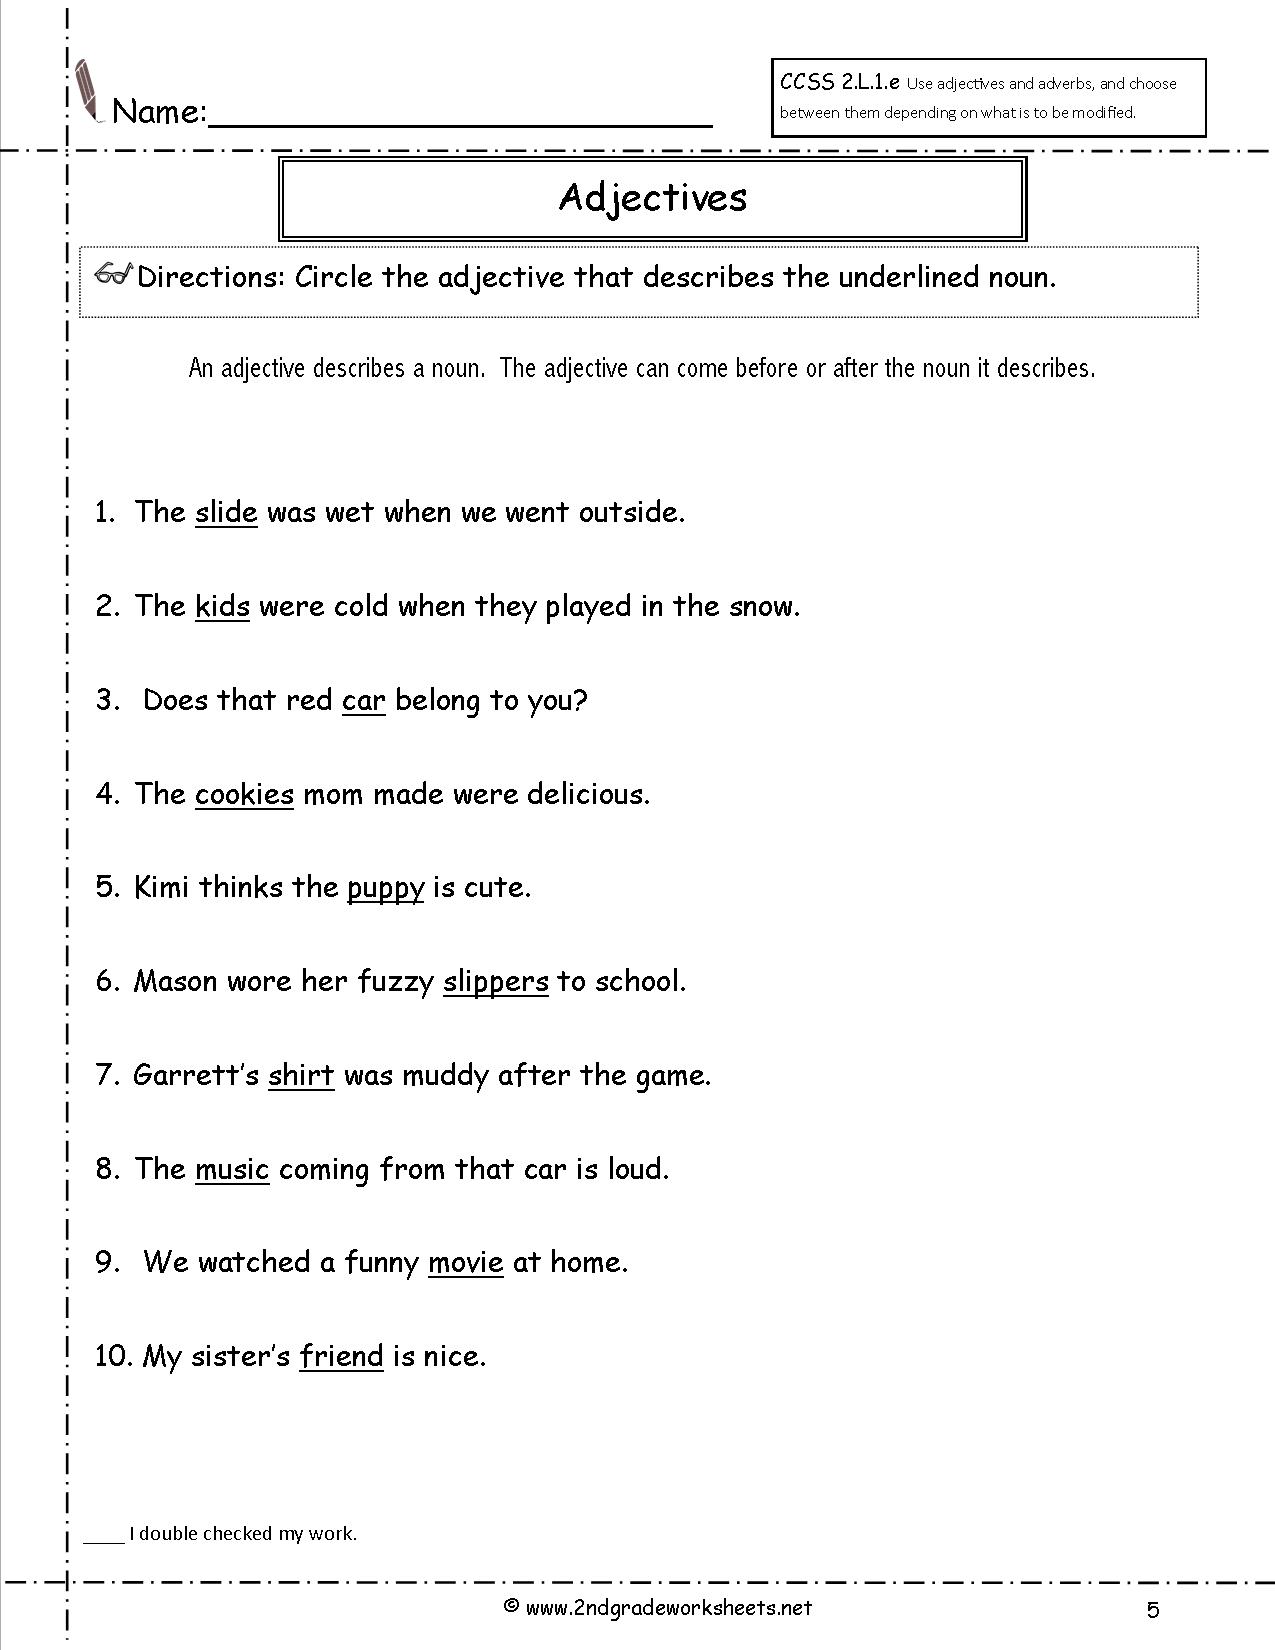 Adjective Adverb Worksheet 2nd Grade Image